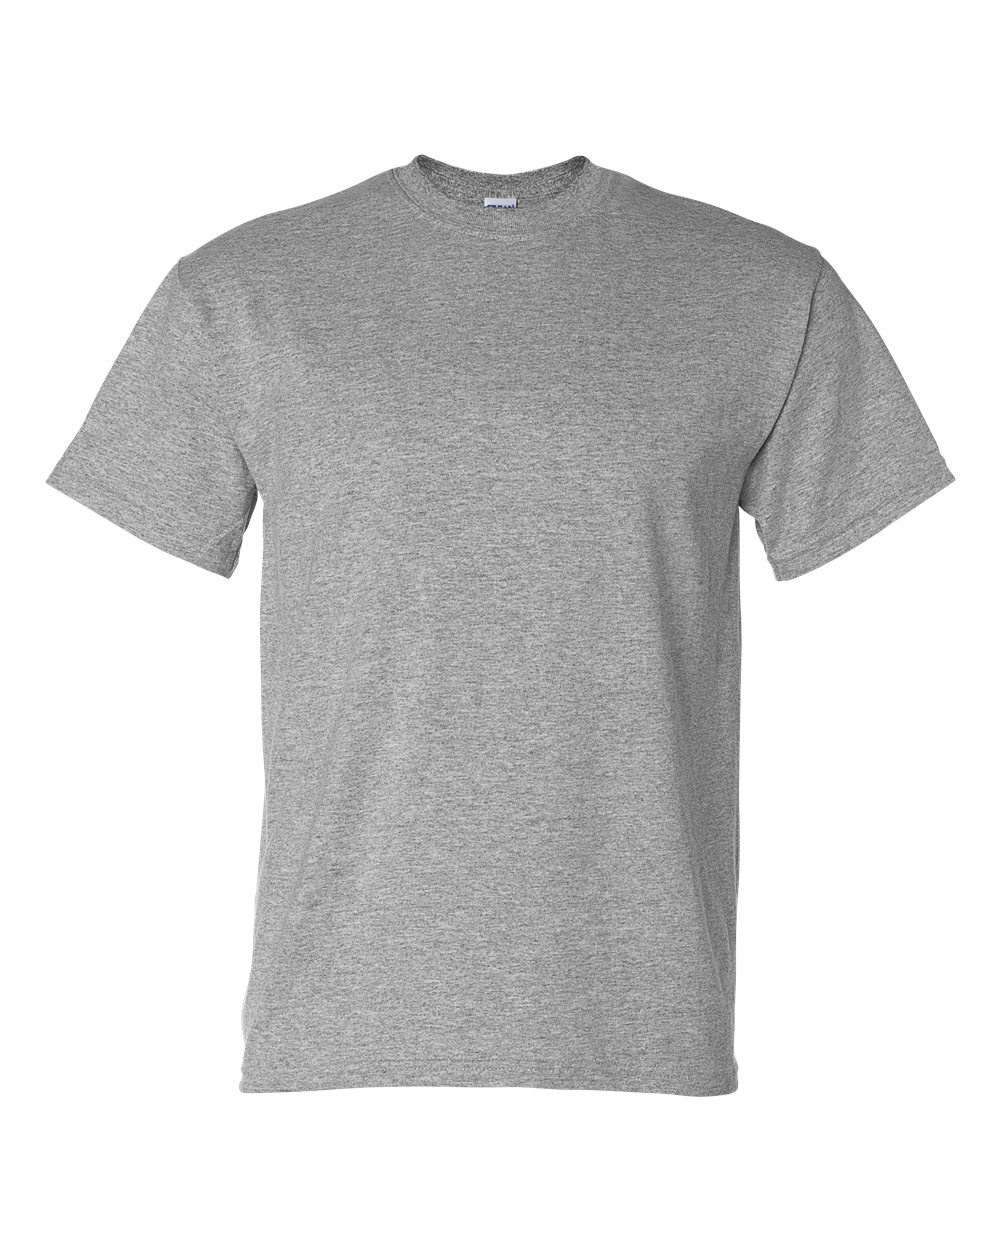 S Pack of 12 Gildan Adult DryBlend Sports T-Shirt Dark Heather